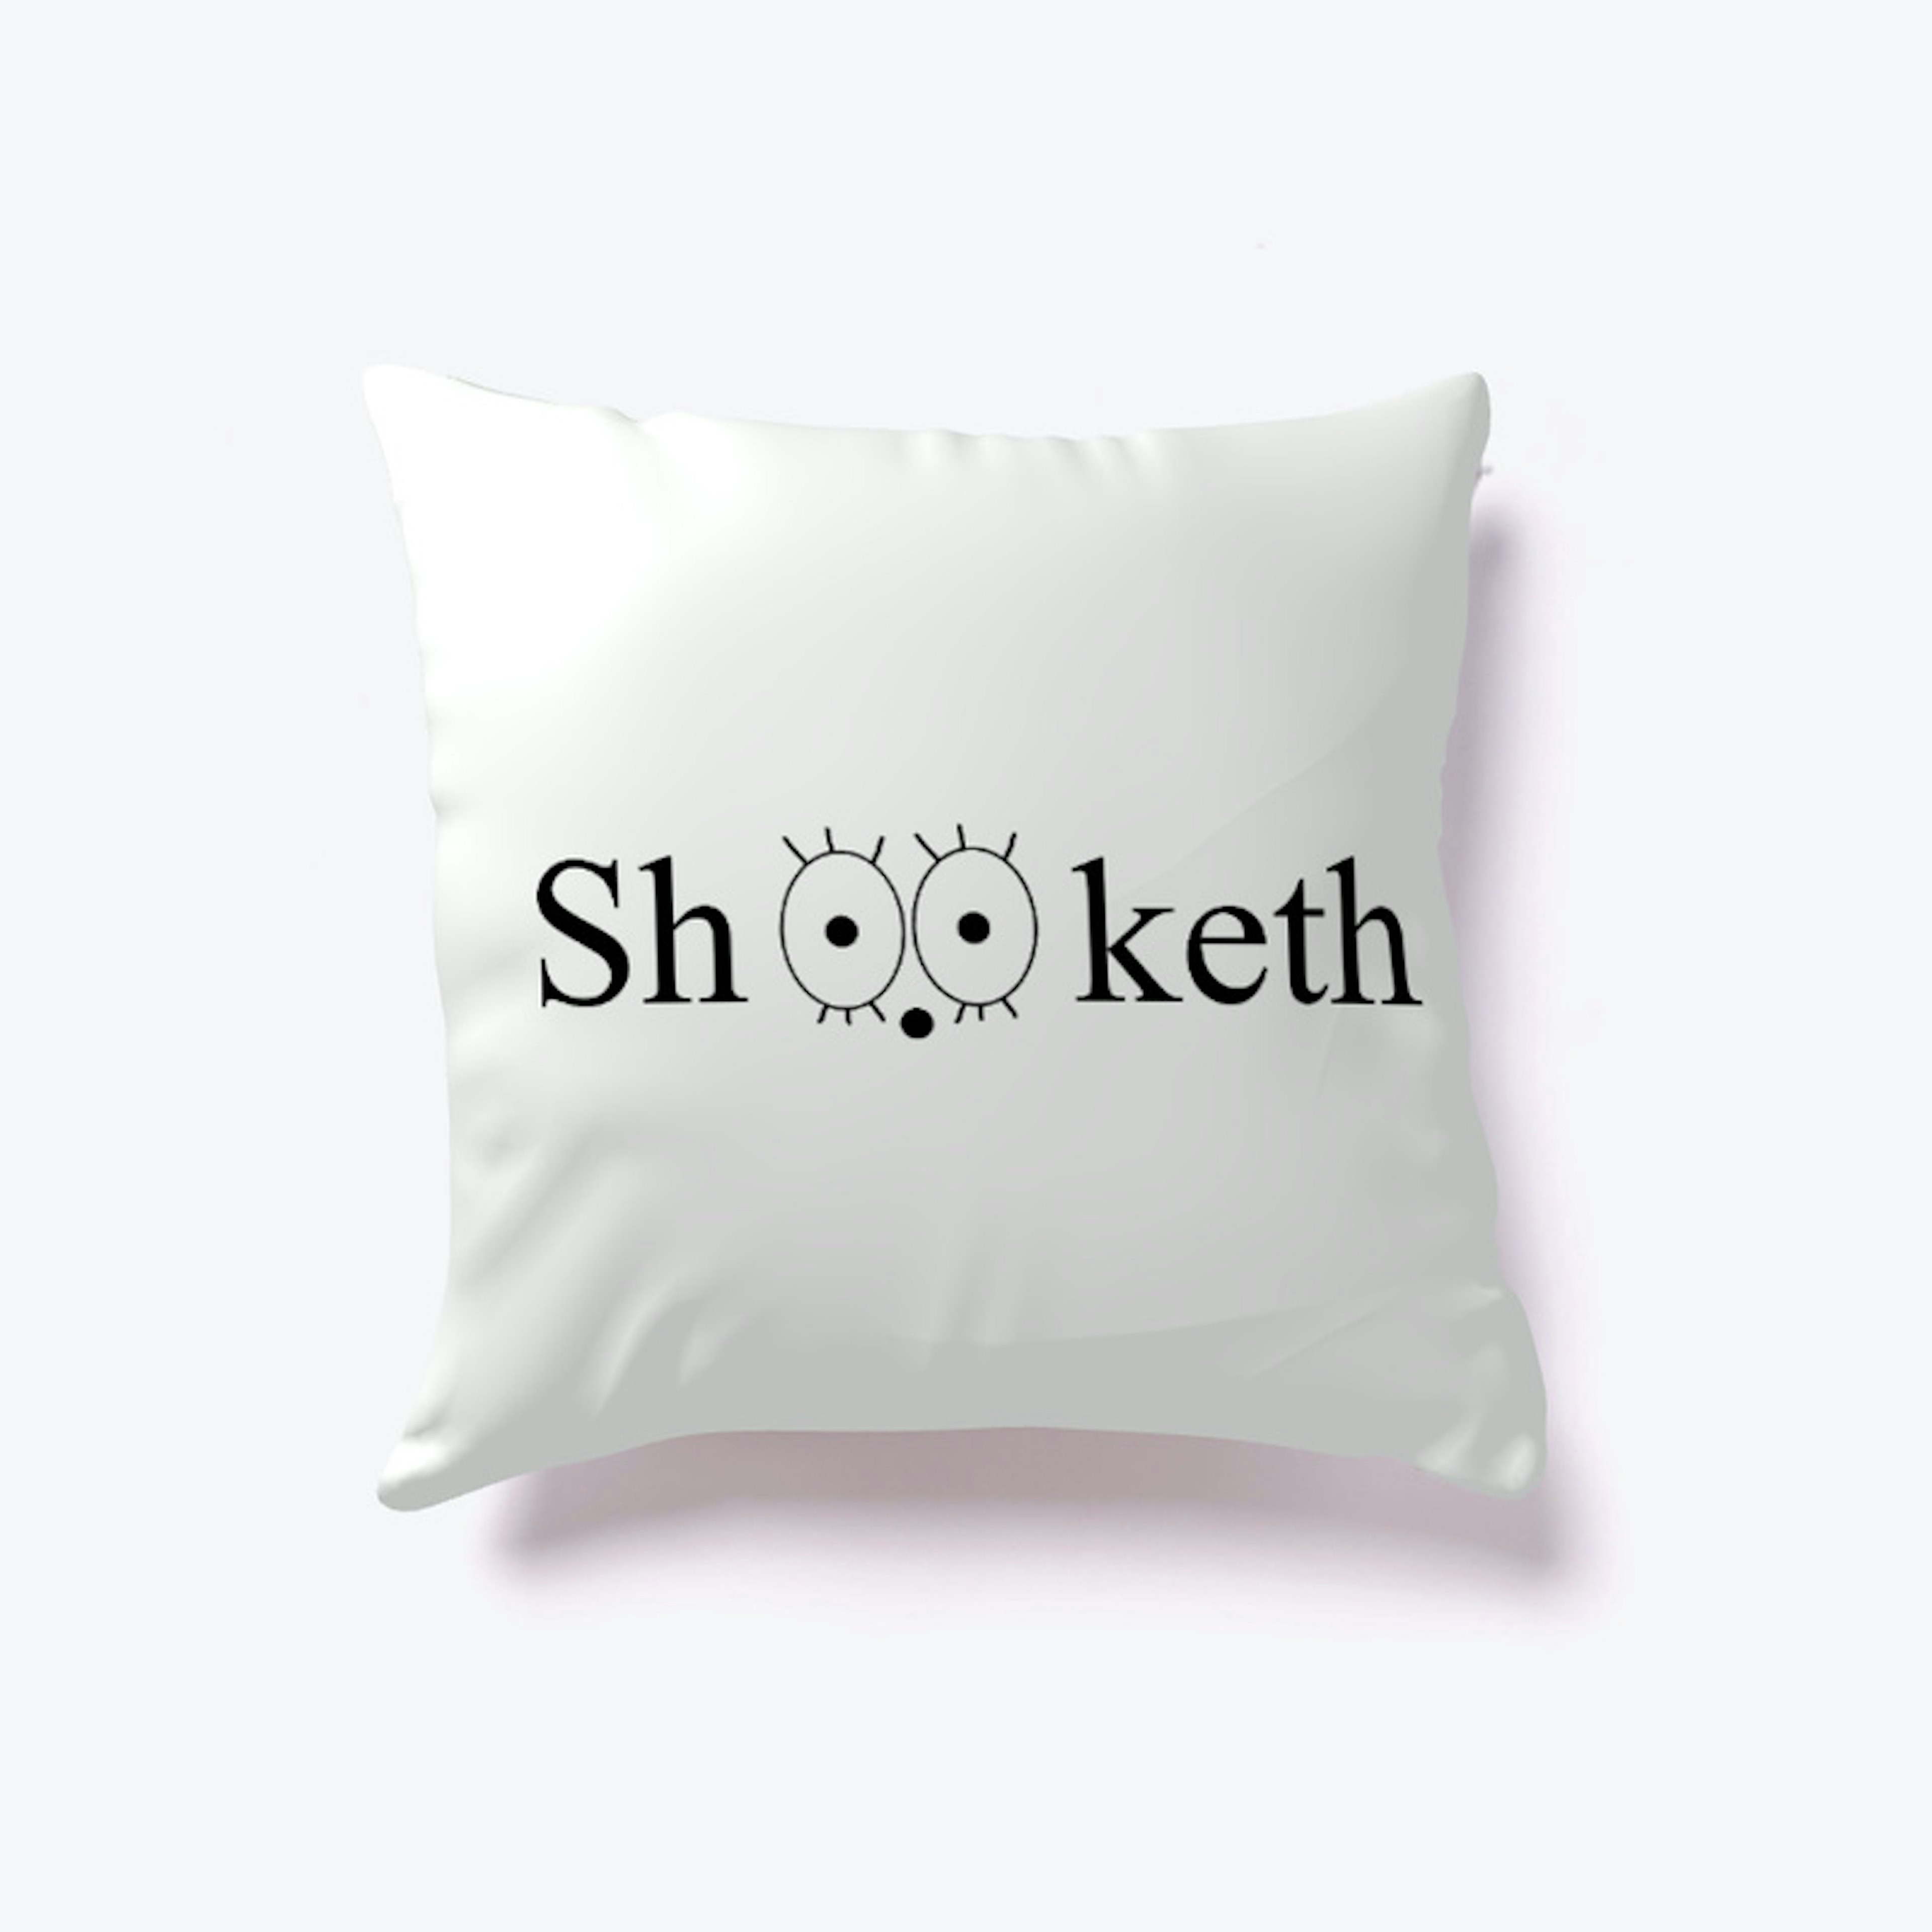 Shooketh Pillow